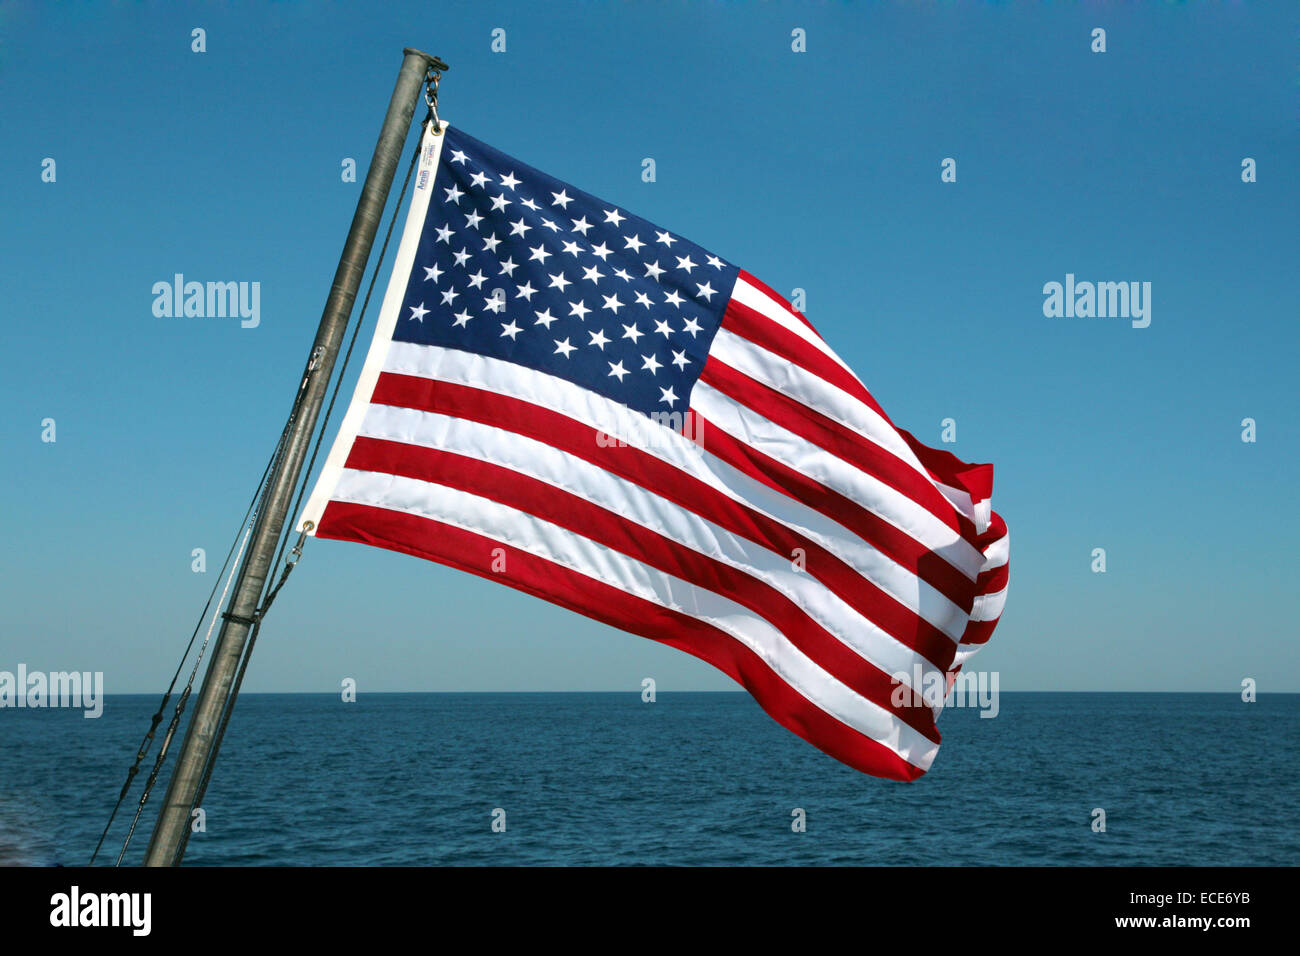 Flagge Amerikanische Flag American Amerika Fahne Fahnen Amerikanisch typisch typical America Stars and Stripes red blue white ro Stock Photo